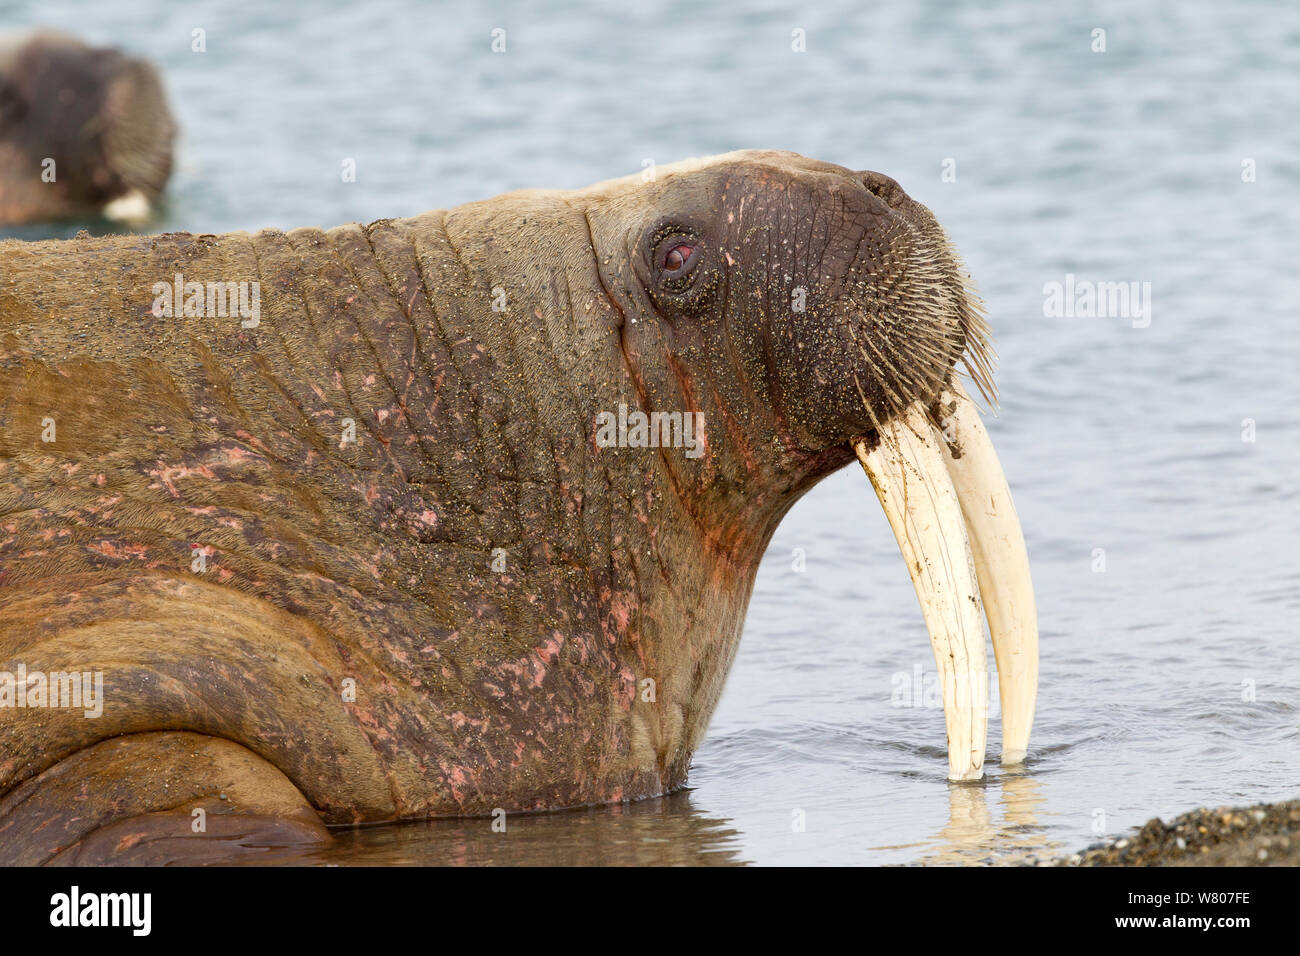 Walrus (Odobenus rosmarus) hauled out in shallow water, Spitsbergen, Svalbard Archipelago, Norway, Arctic Ocean. July. Stock Photo